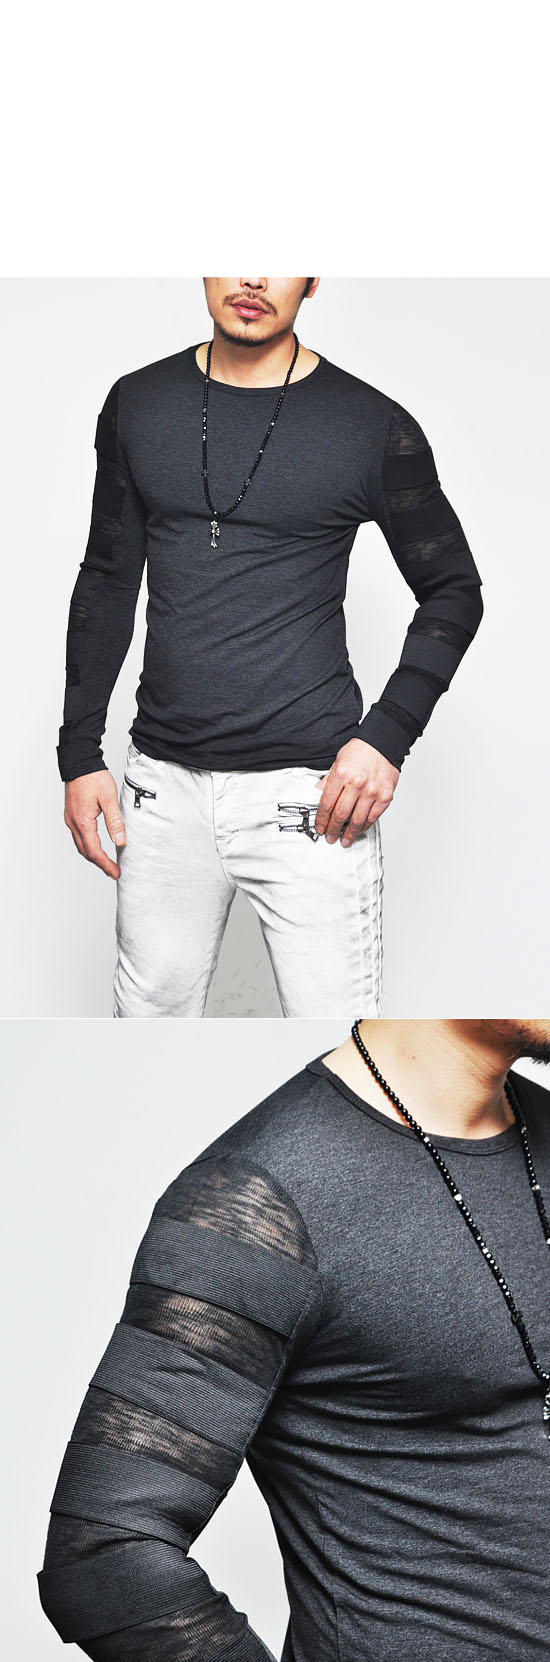 Designer Mod Mens Slim Fit Edge Elastic Bandage Strap Sleeve Tee By ...